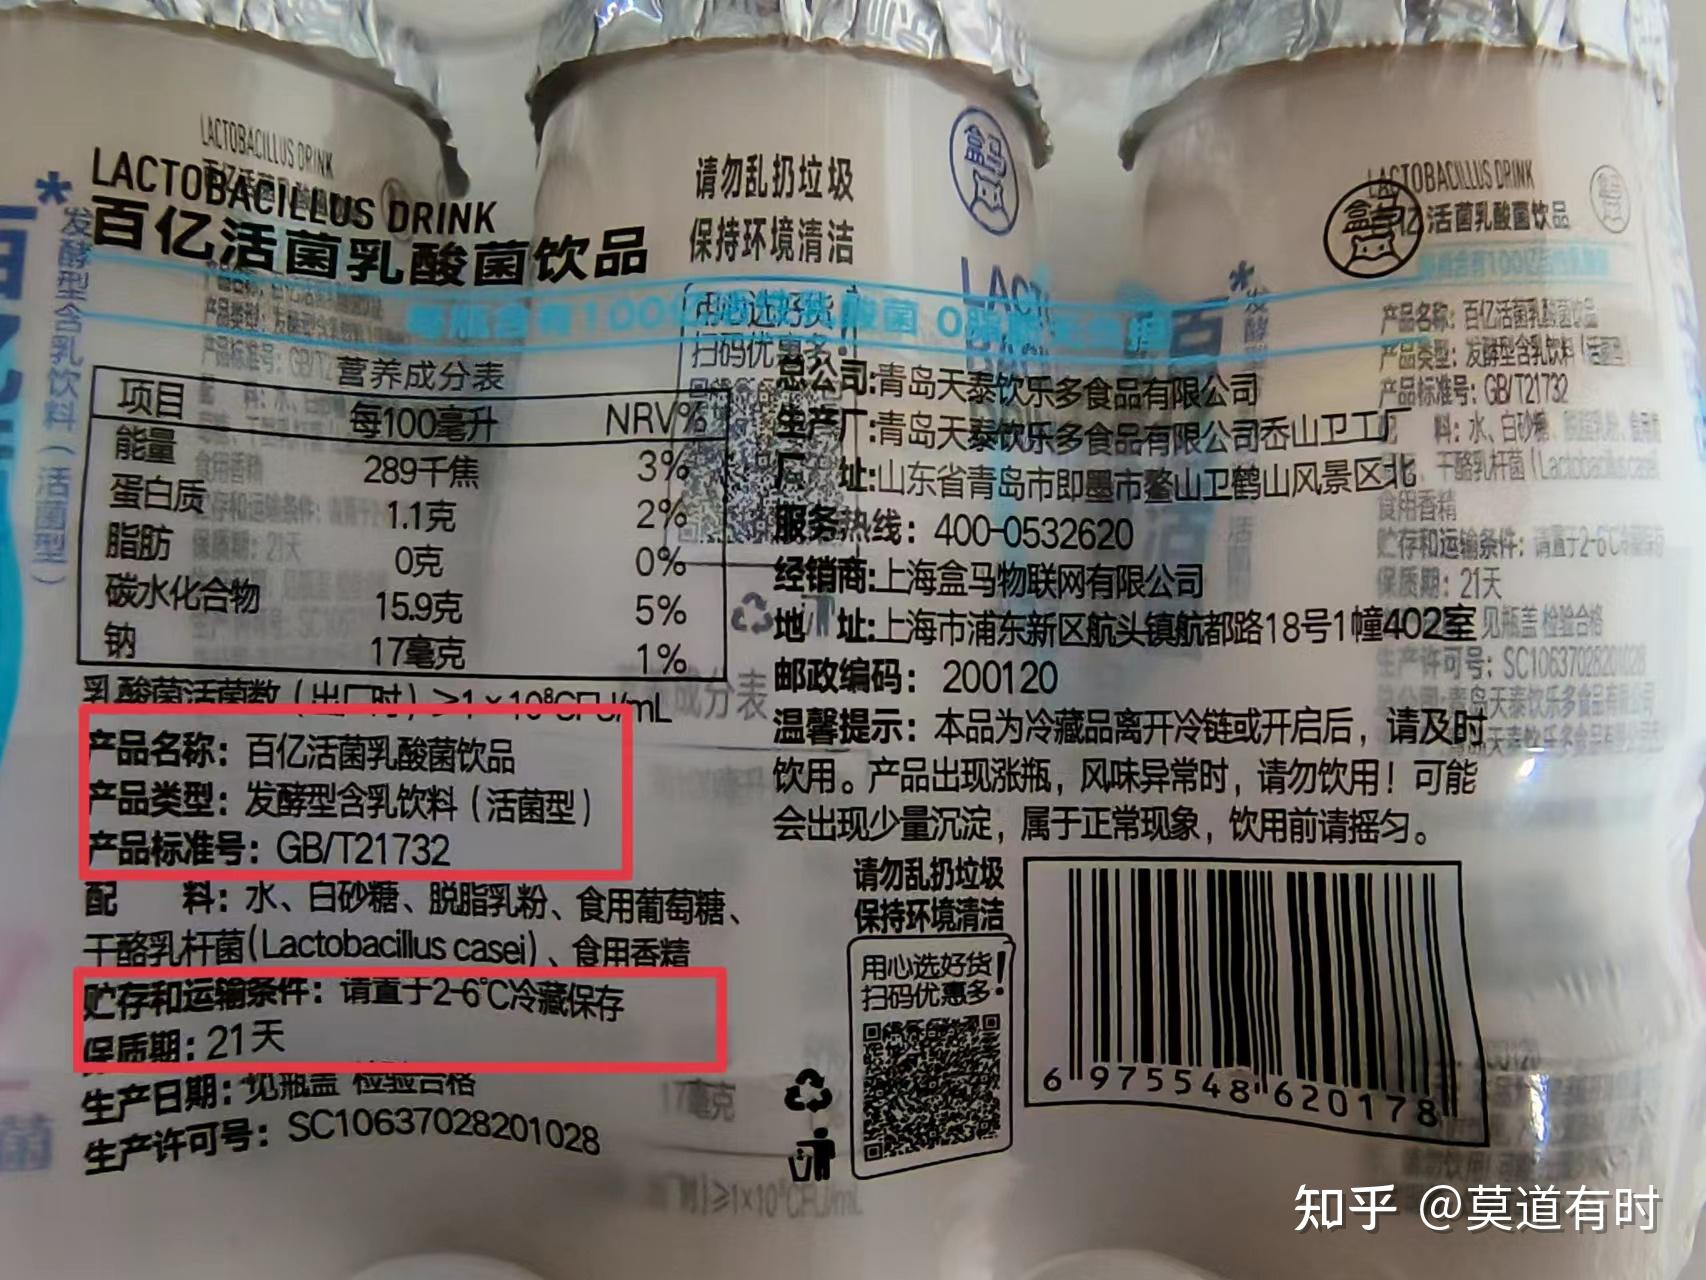 280ml水蜜桃味果蔬酸奶饮品-含乳饮料-品牌产品-浙江李子园食品股份有限公司